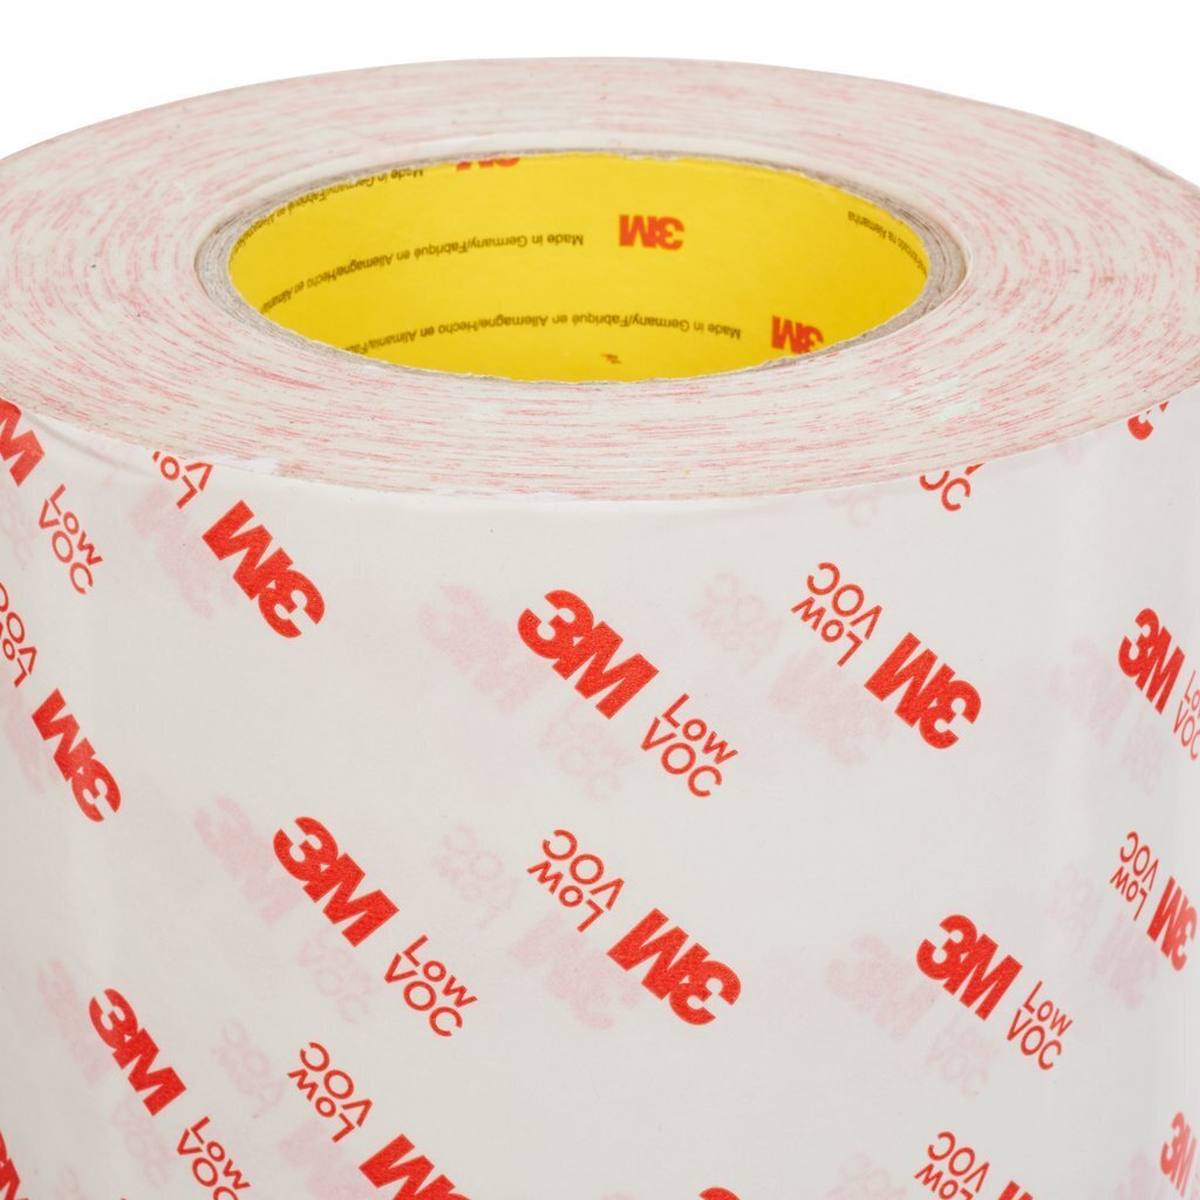 3M Dubbelzijdig plakband met vliespapier als rug 99015LVC, wit, 19 mm x 50 m, 0,15 mm